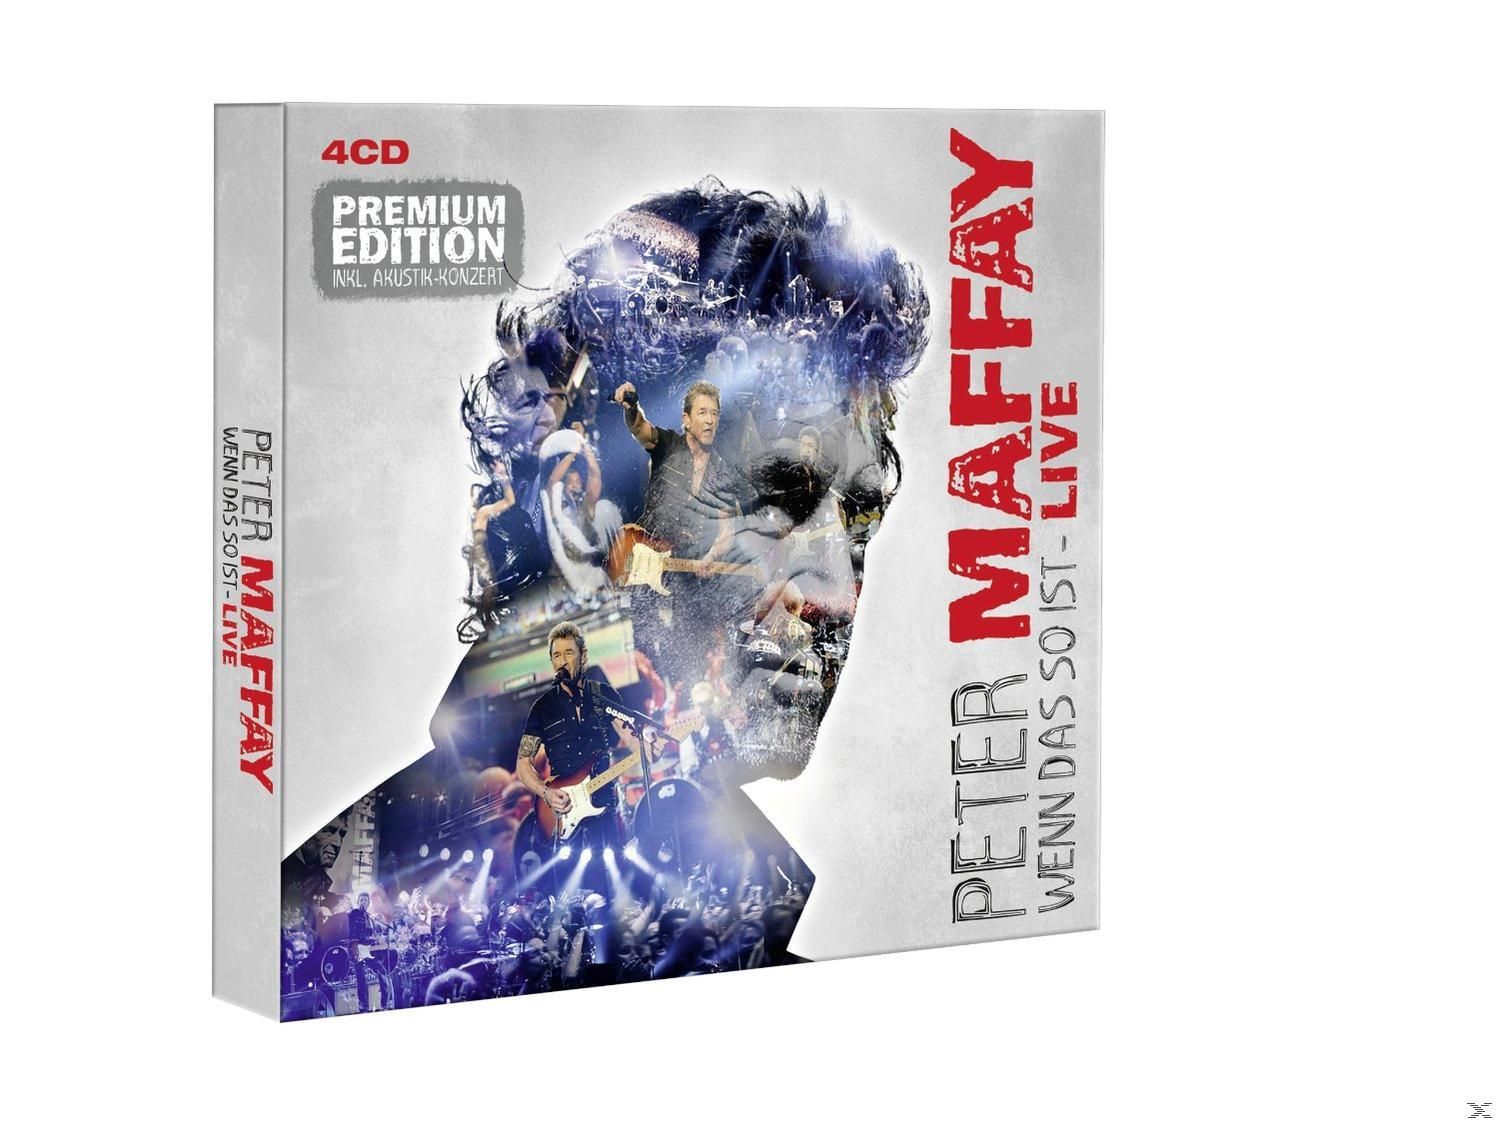 Maffay (CD) inkl. das Wenn - Edition Peter (Premium Akustik-Konzert) - so ist-LIVE